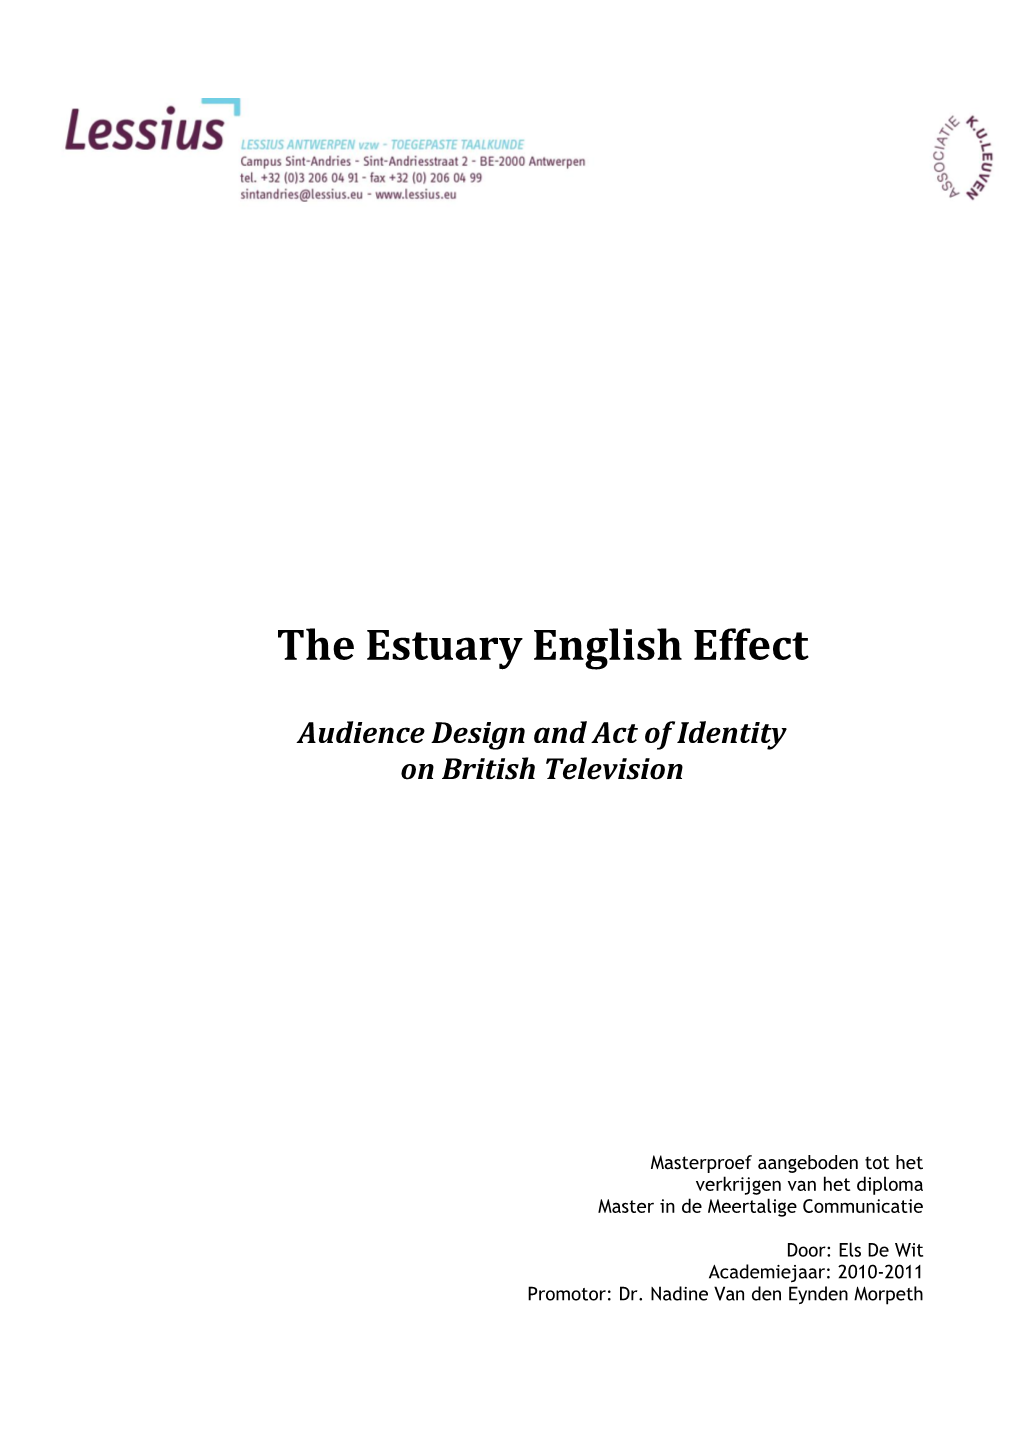 The Estuary English Effect